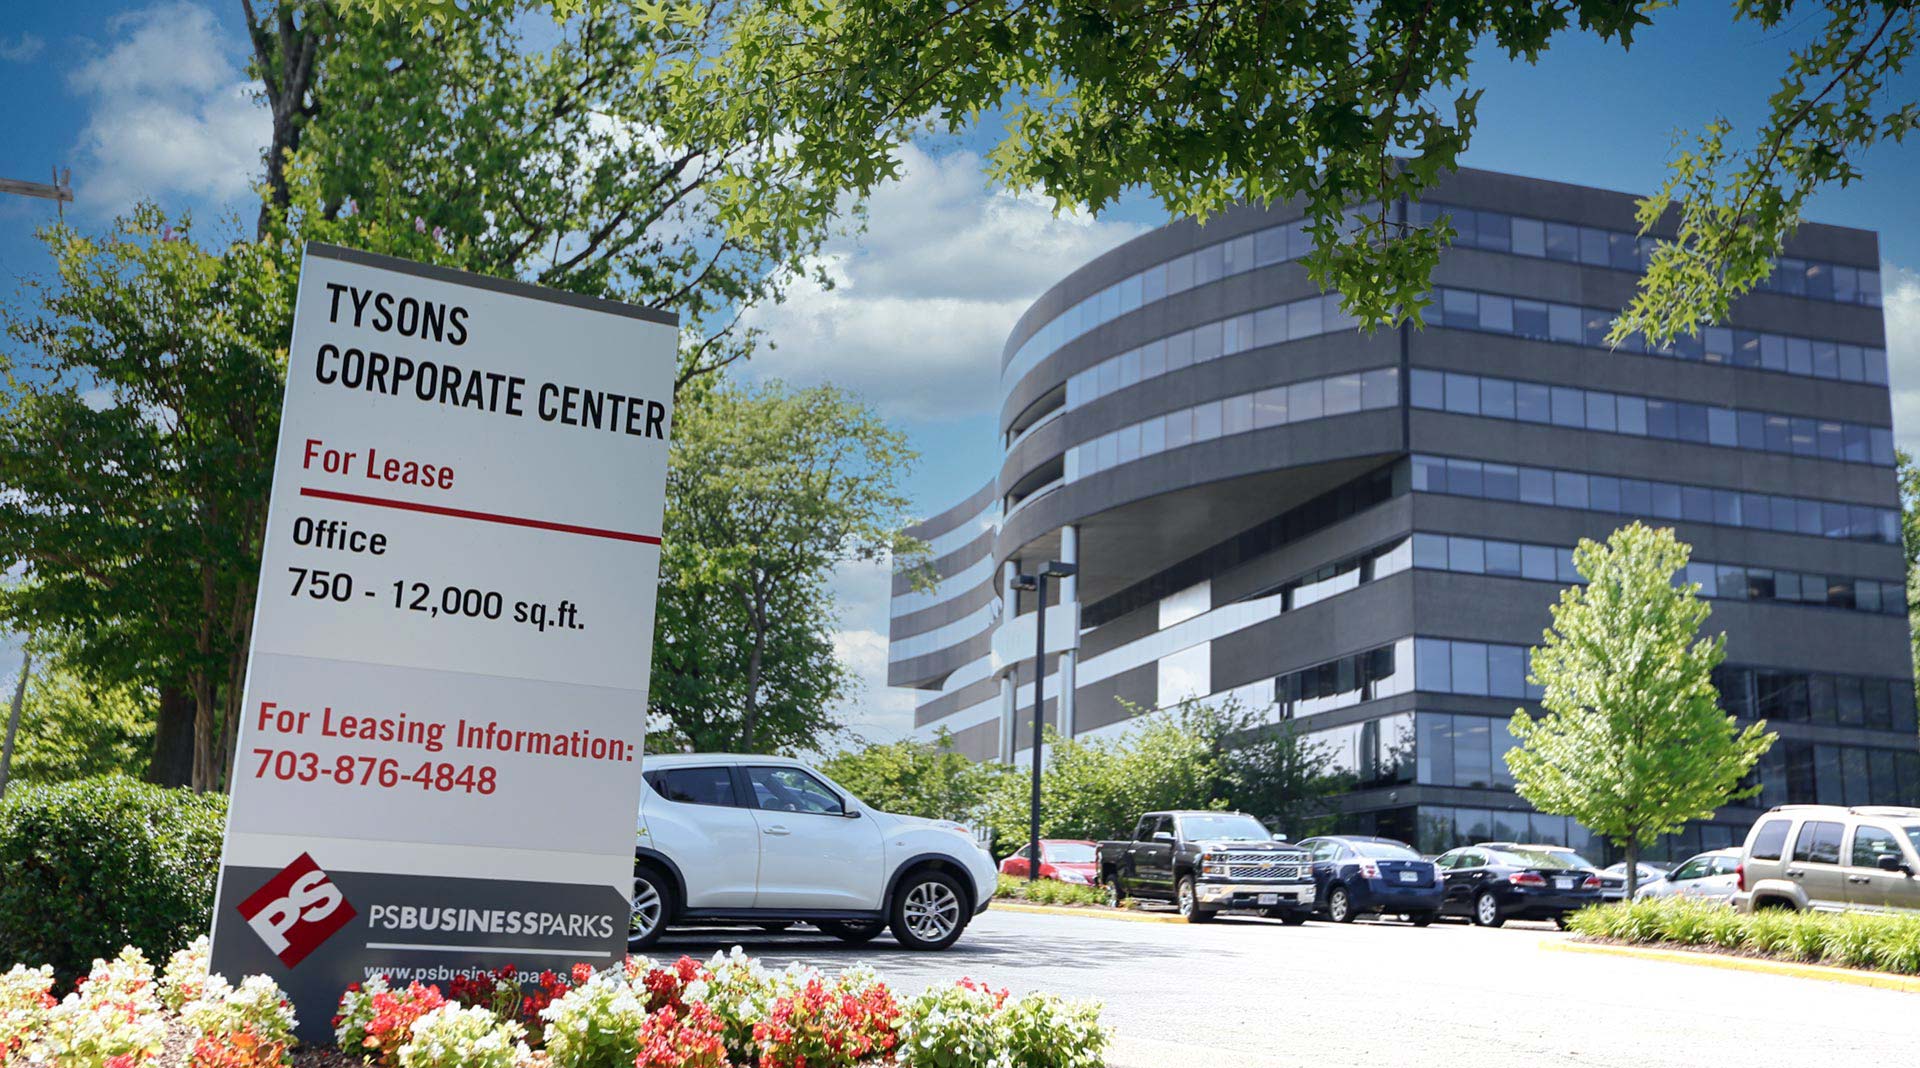 Tysons Corporate Center exterior entrance sign photo